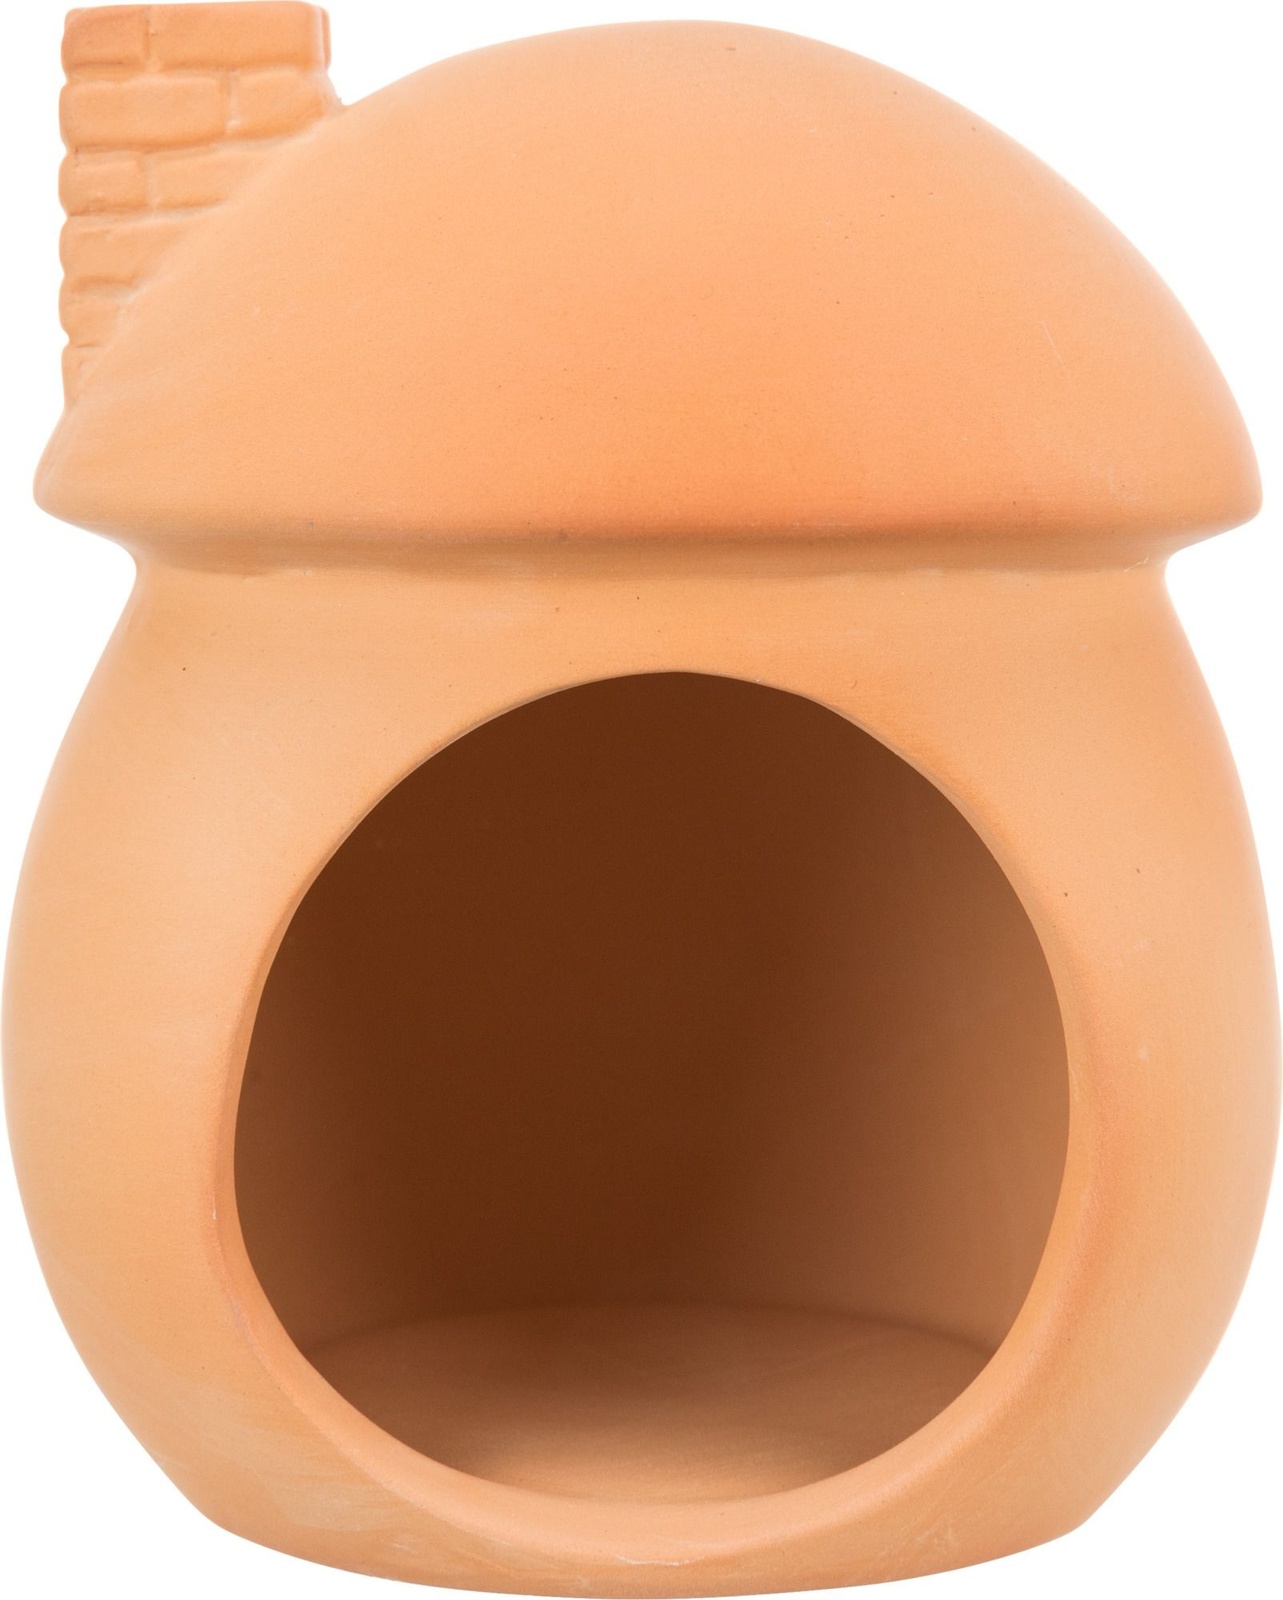 Trixie Trixie домик для мышей, керамика, терракотовый (246 г) trixie домик для мышей и хомяков керамика 11 x 6 x 10 см терракотовый 61374 0 275 кг 56341